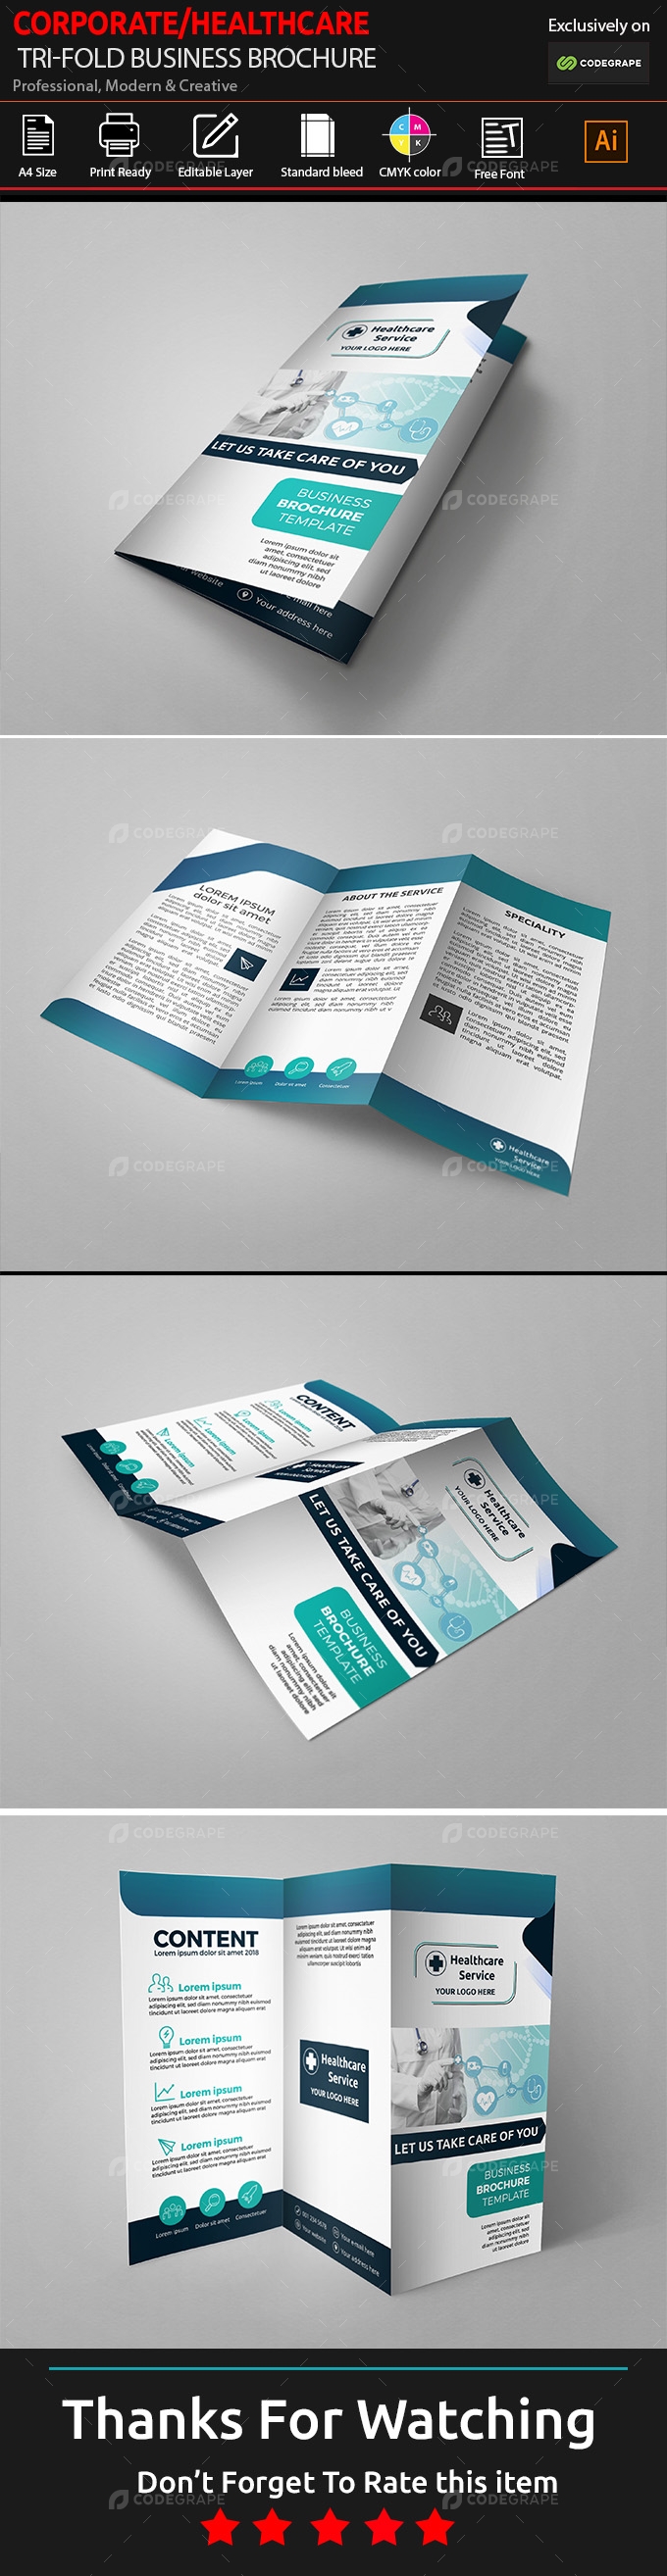 Tri-Fold Business Brochure